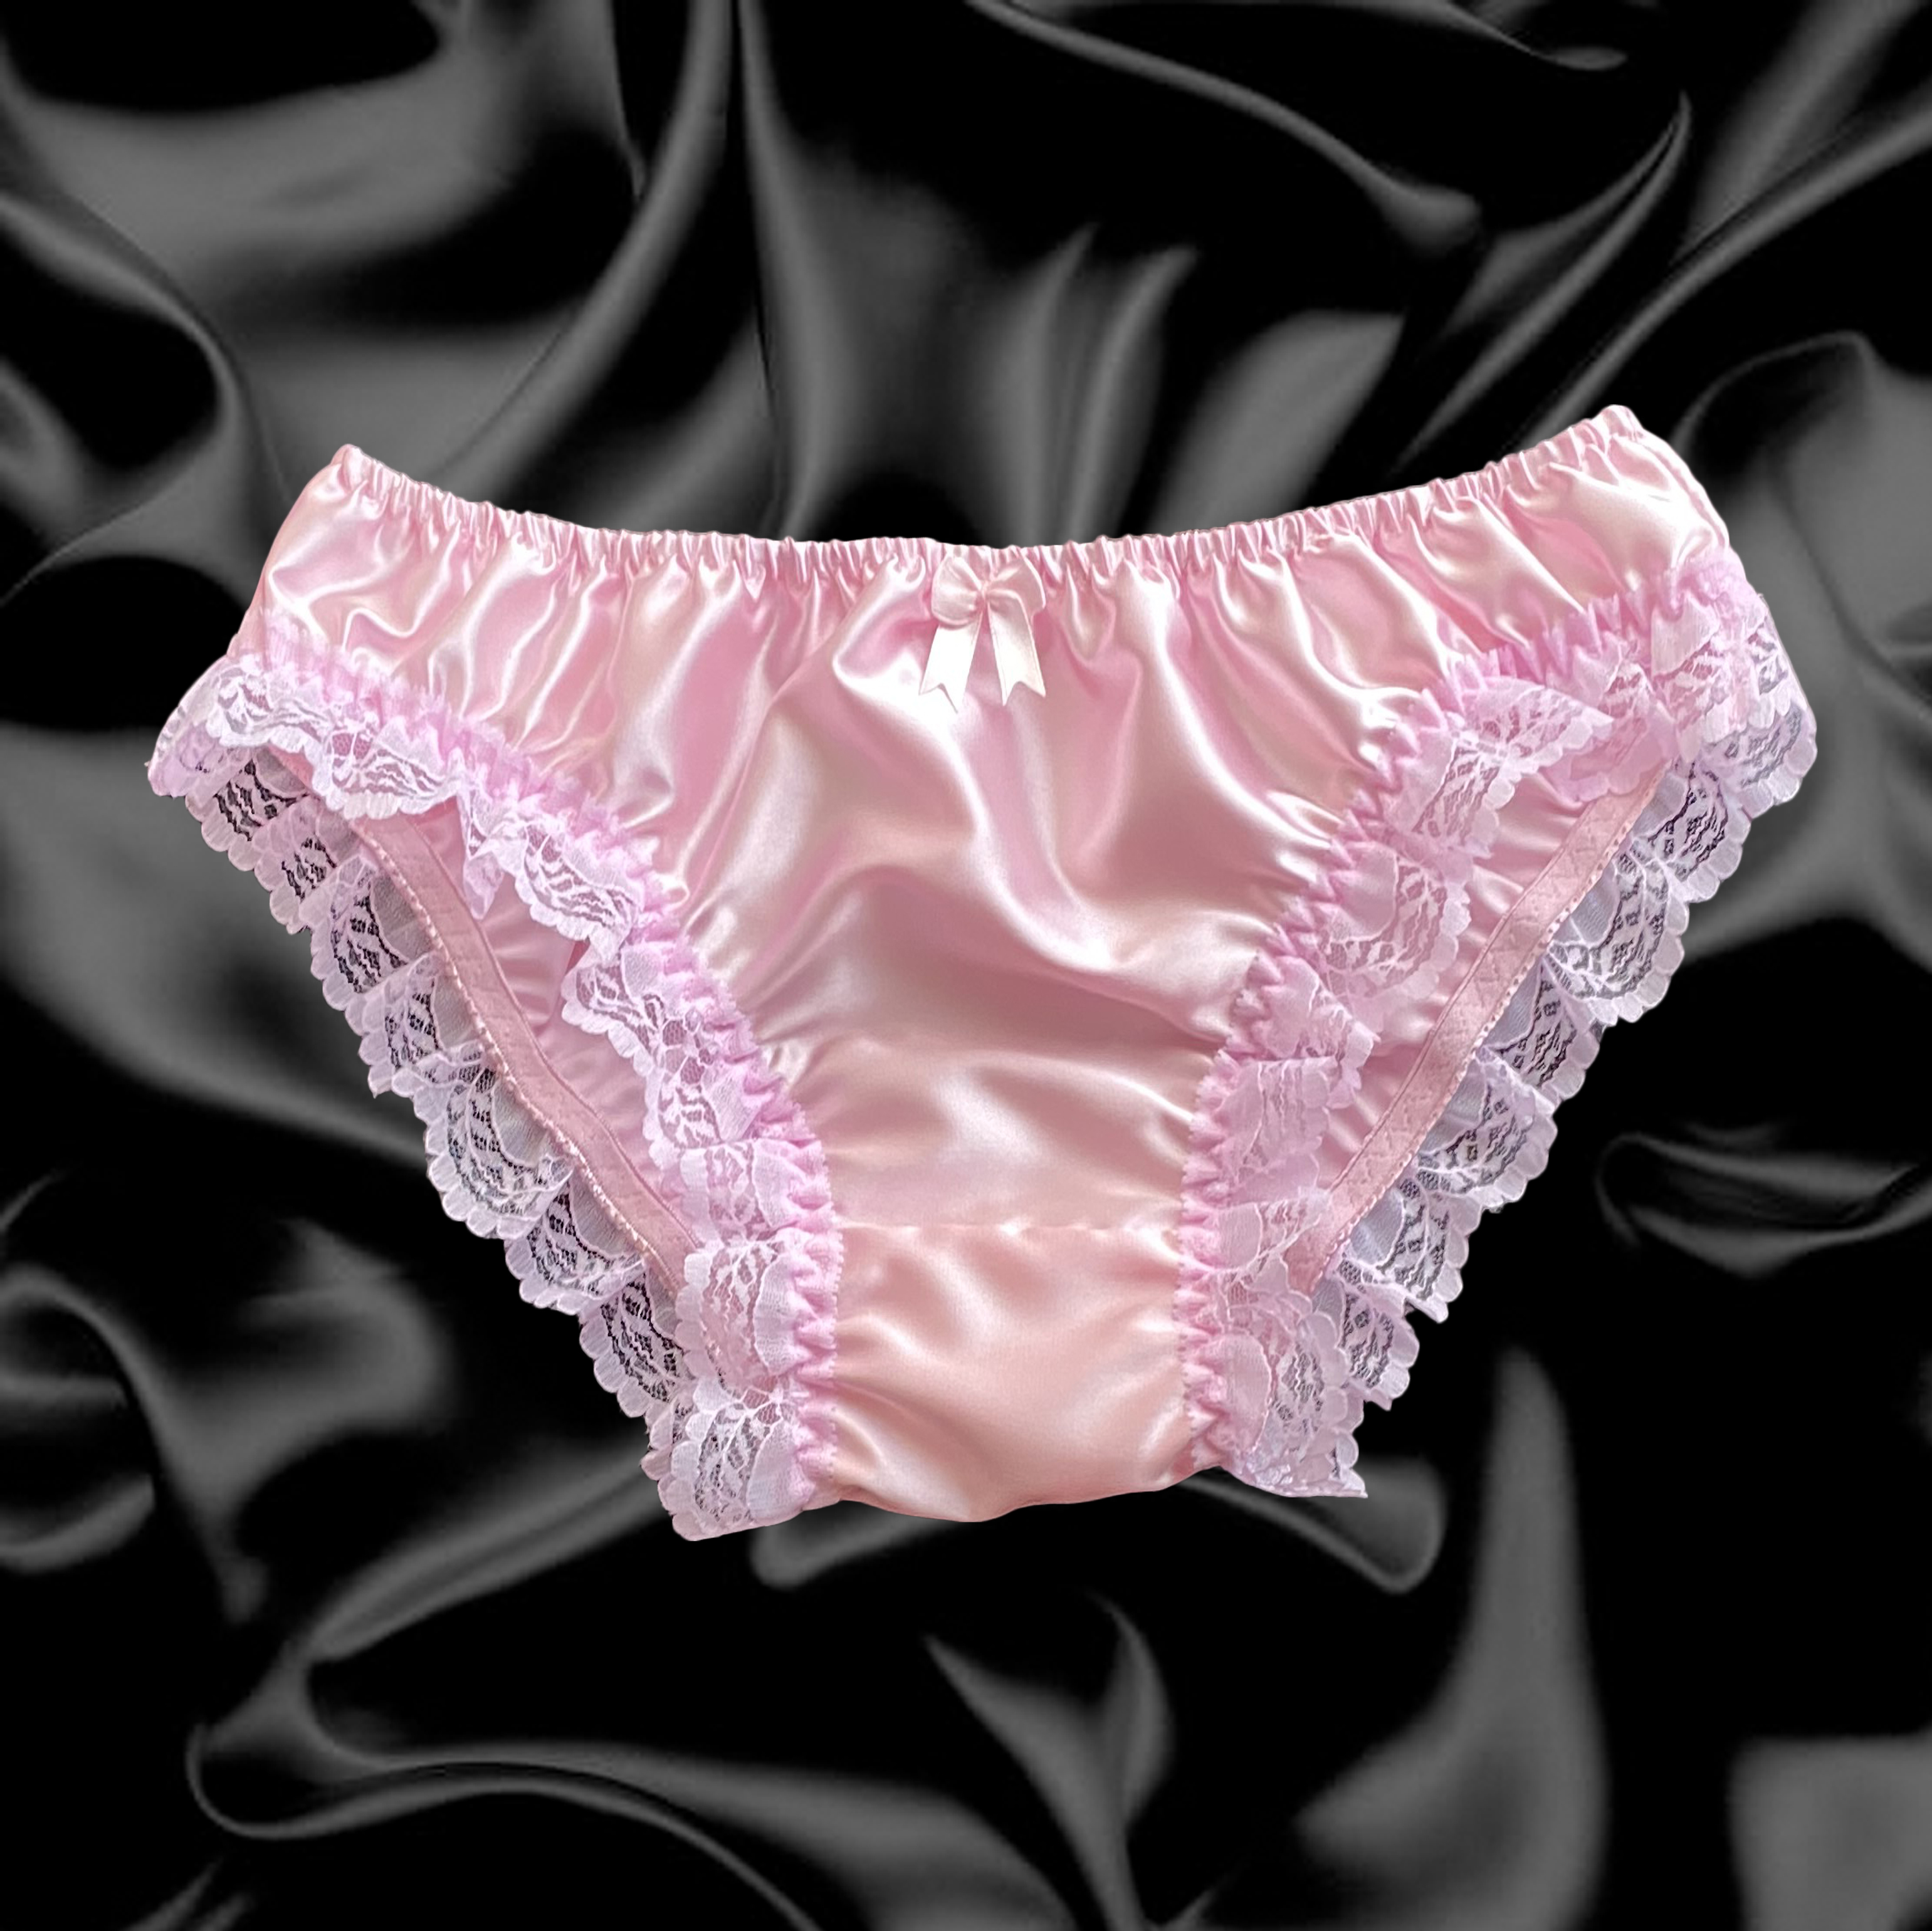 New Satin Lace Sissy Frilly Full Panties Bikini Knicker Underwear Size 10 20 Ebay